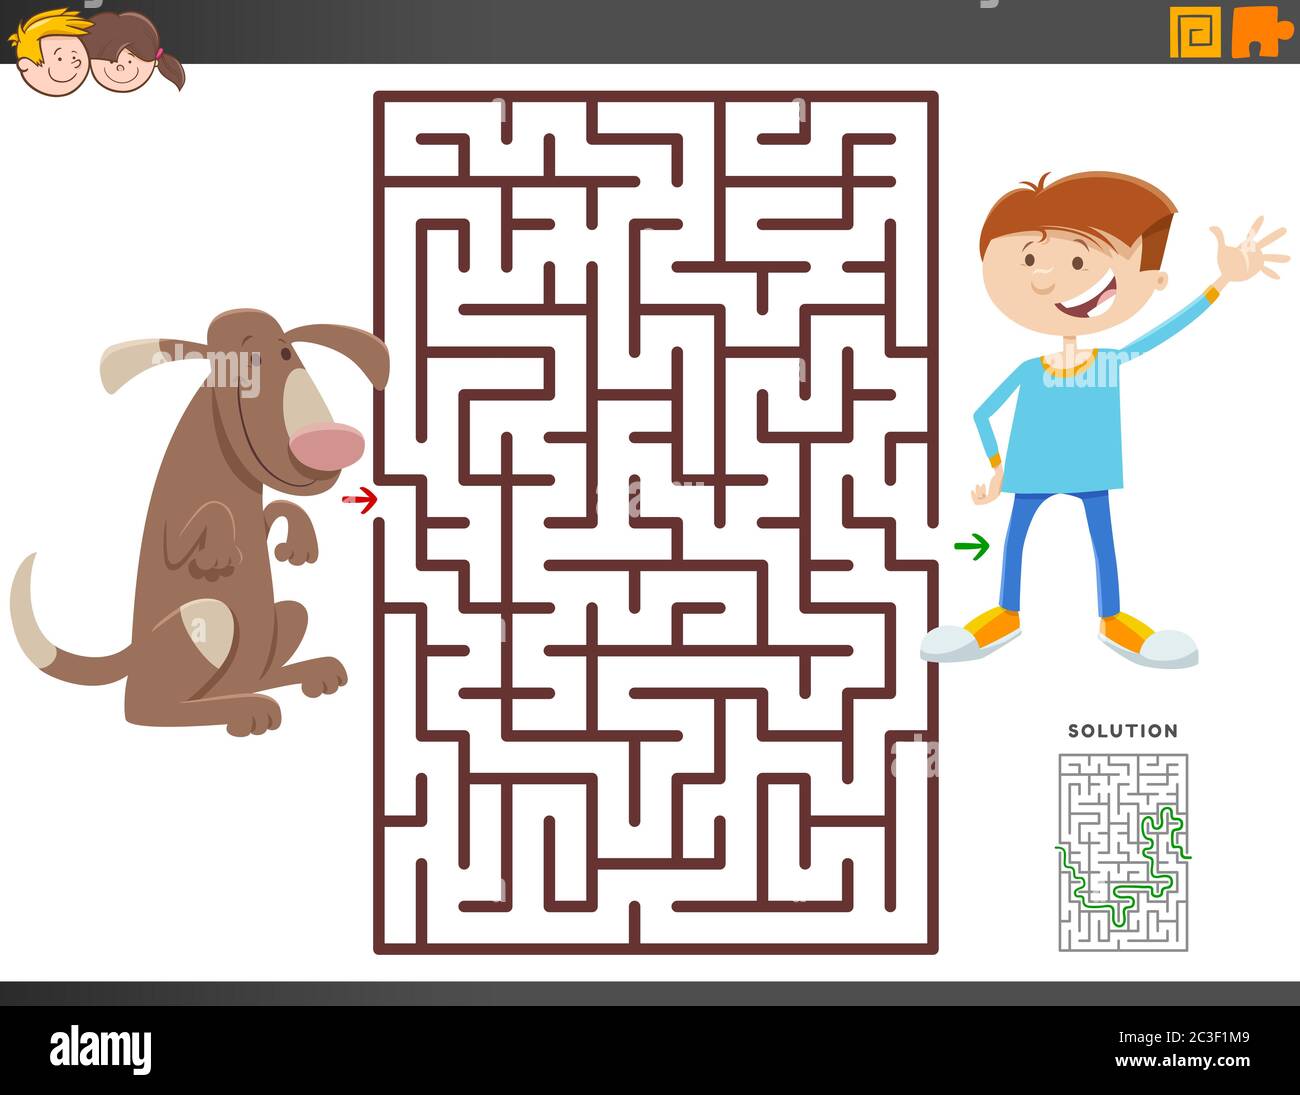 https://c8.alamy.com/comp/2C3F1M9/maze-game-with-cartoon-boy-and-dog-2C3F1M9.jpg